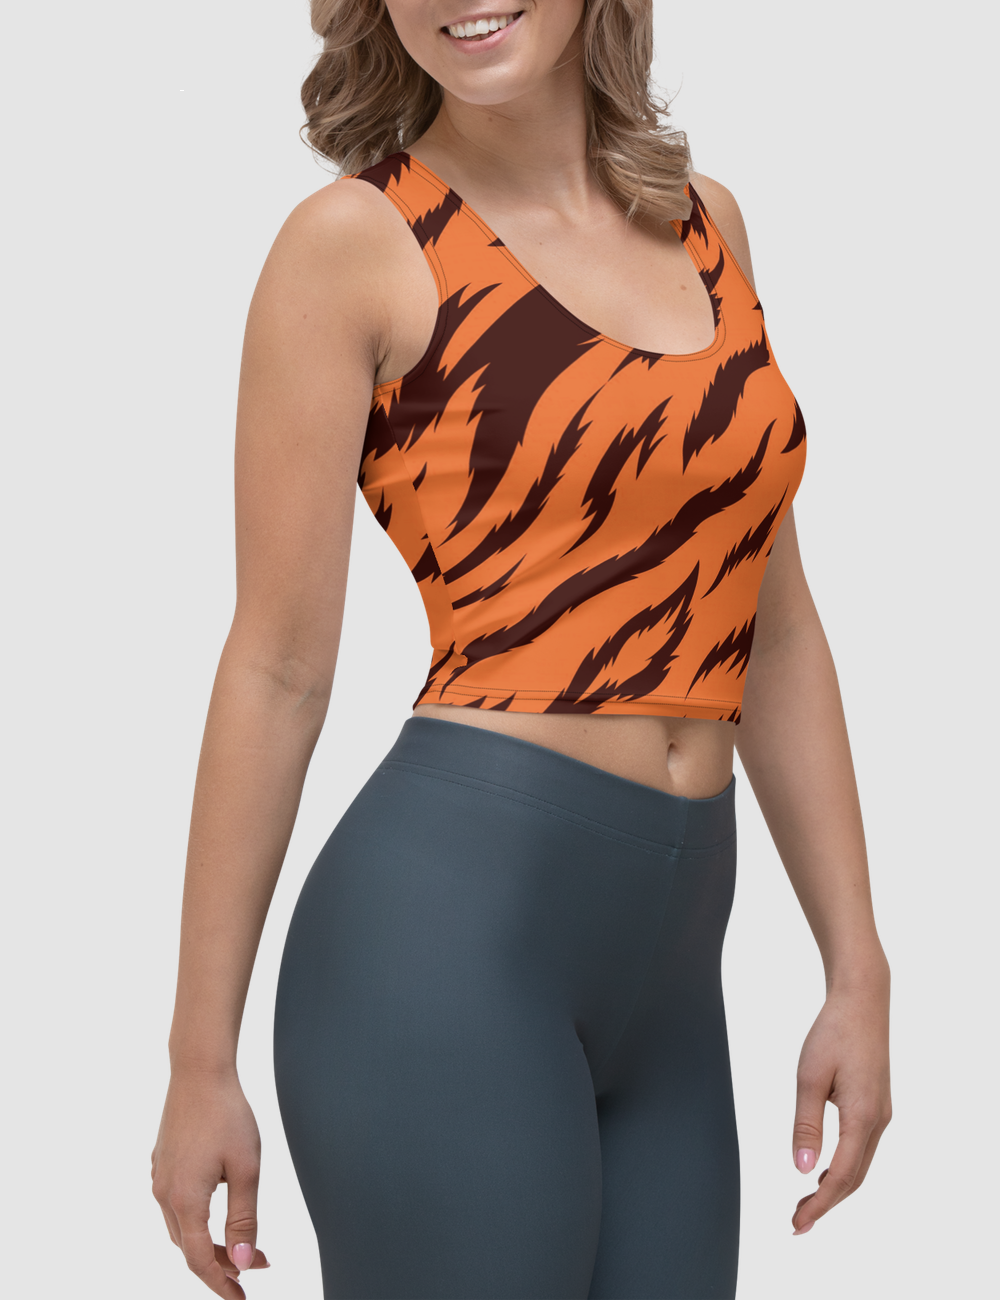 Orange Tiger | Women's Sleeveless Fitted Crop Top OniTakai